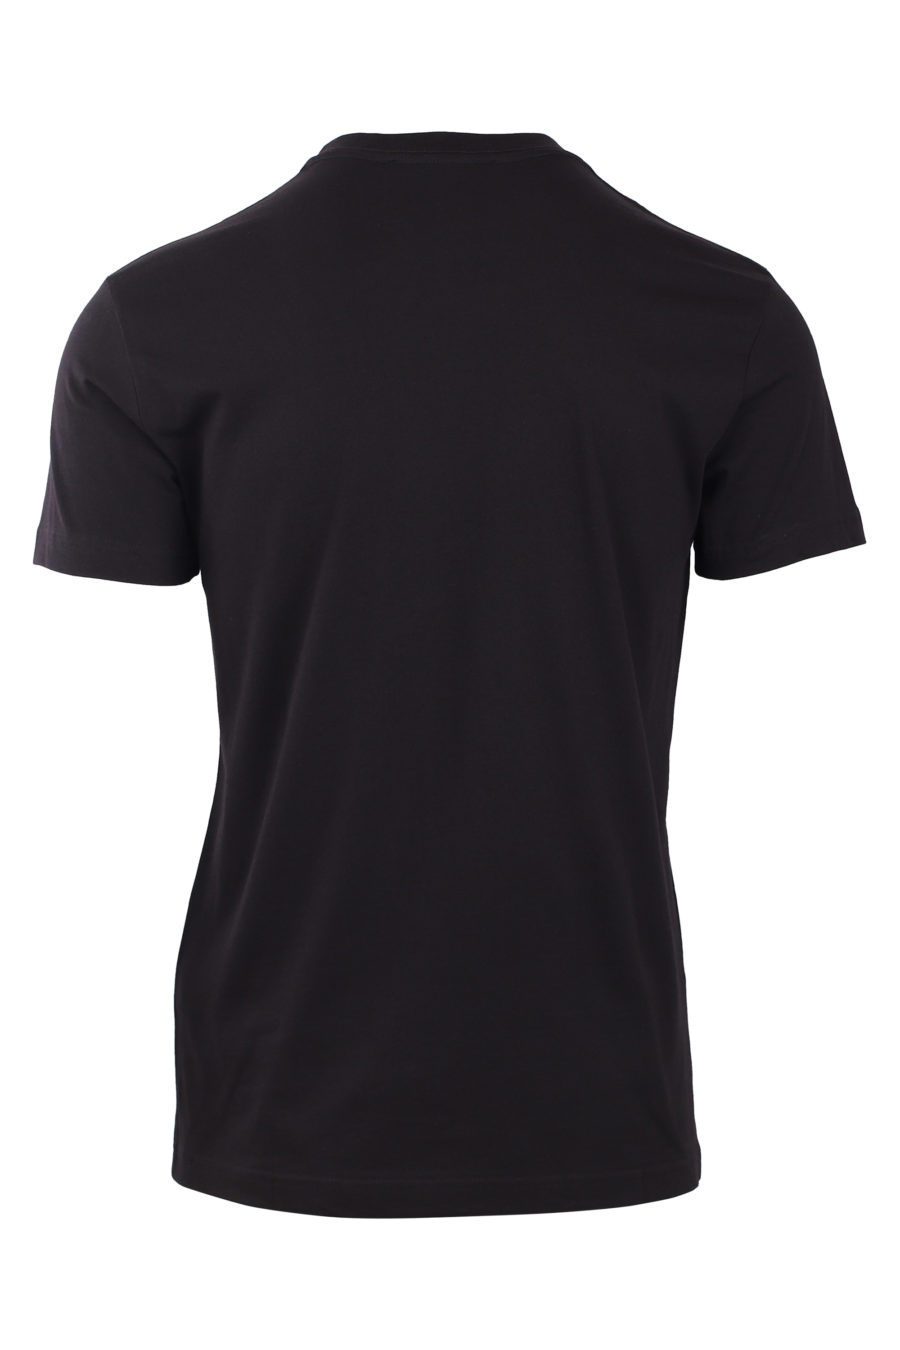 Camiseta negra con maxilogo plateado - IMG 0788